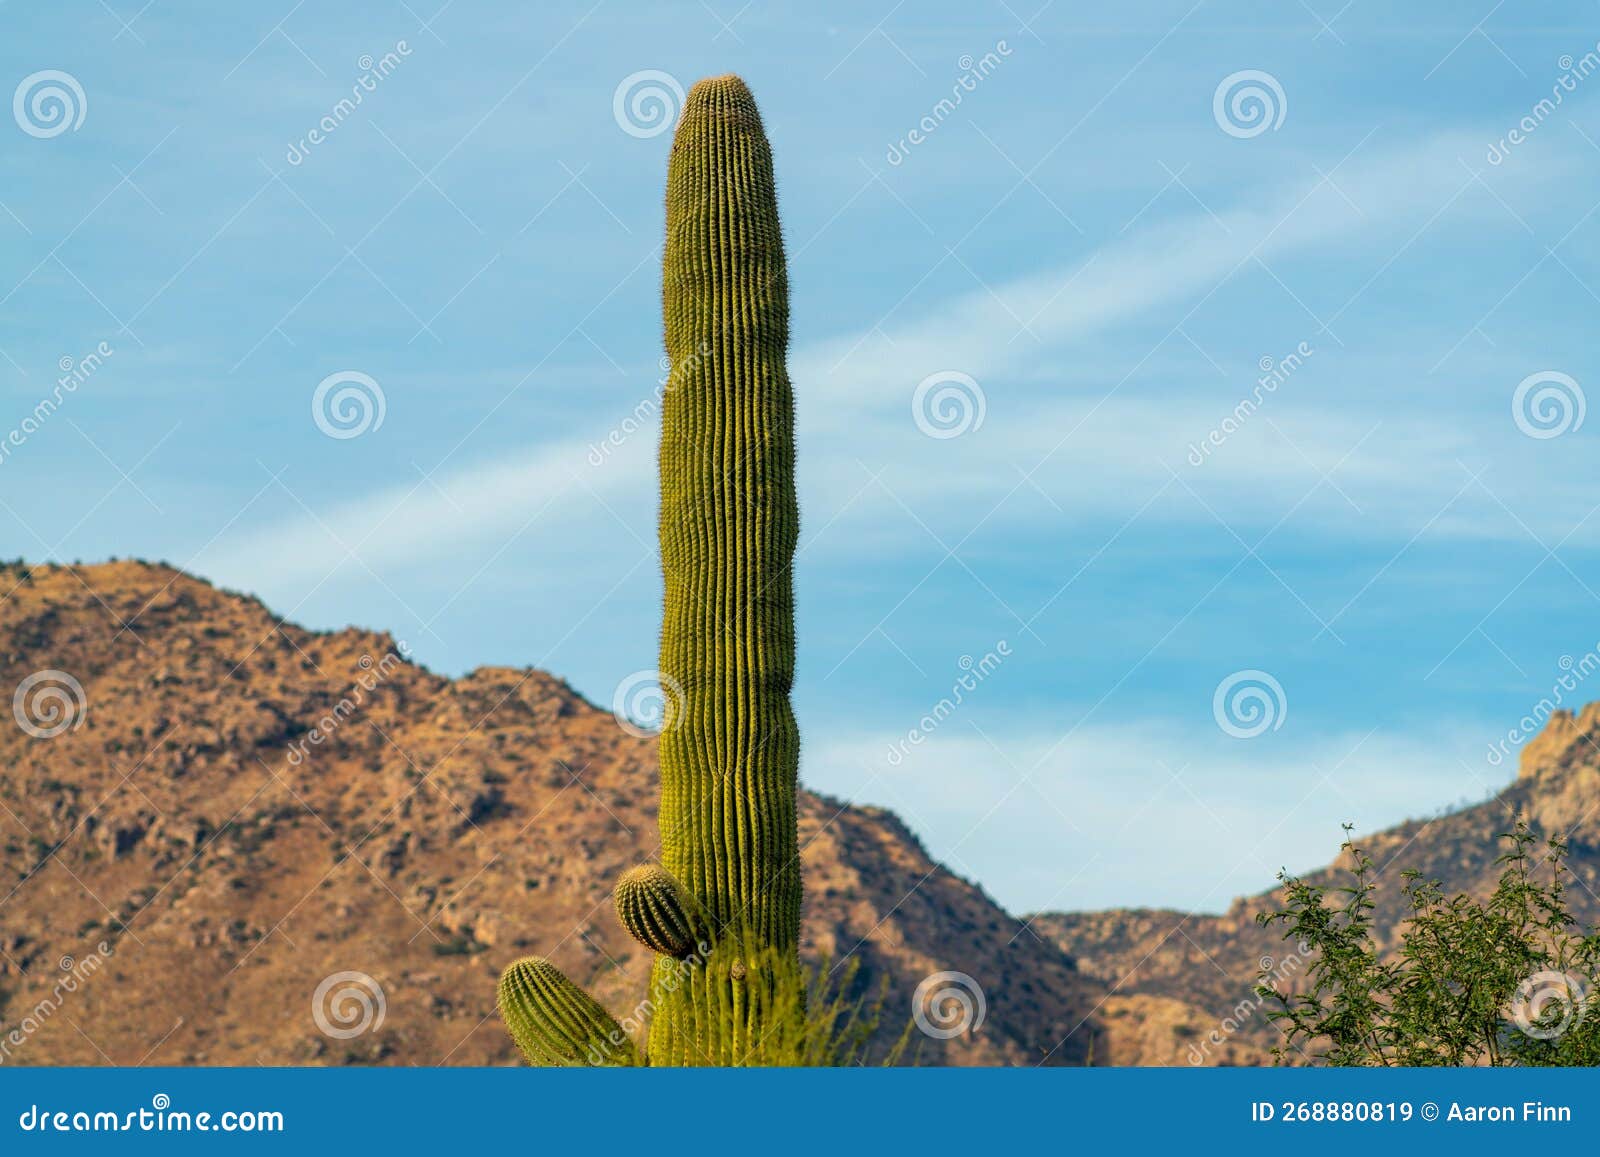 Planta cacto saguaro em fundo branco